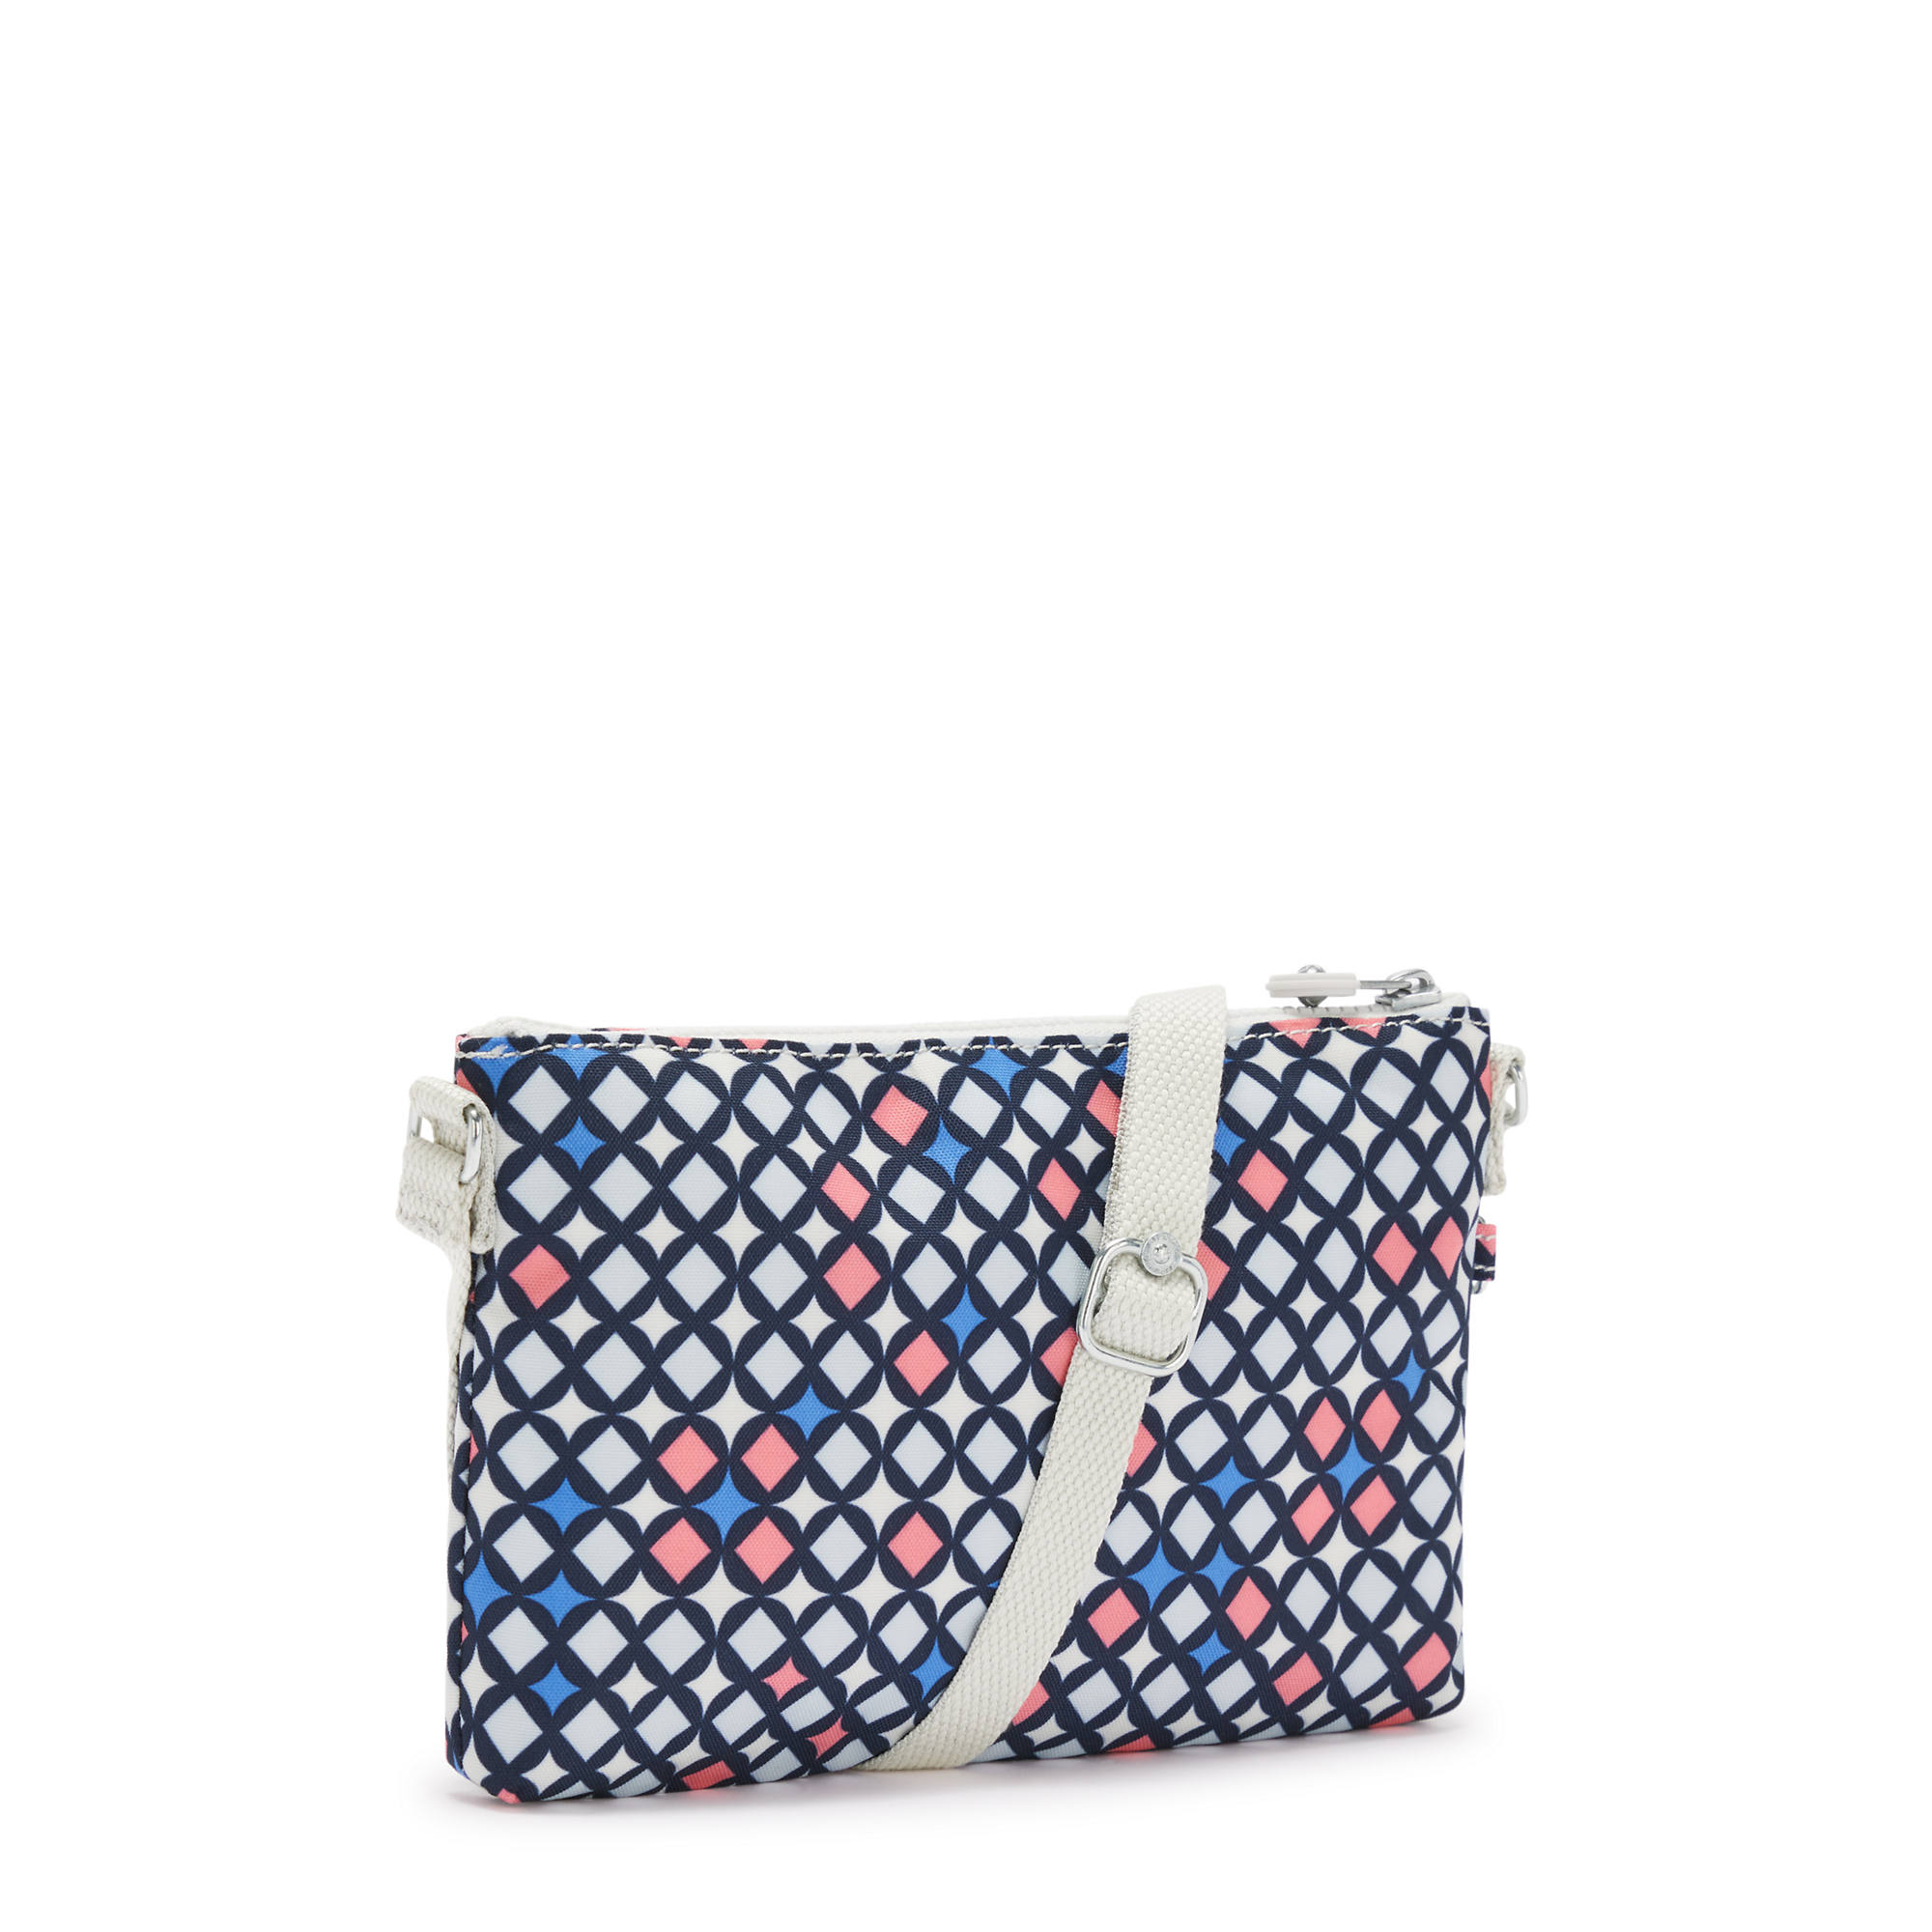 Kipling Mikaela Printed Crossbody Bag | eBay